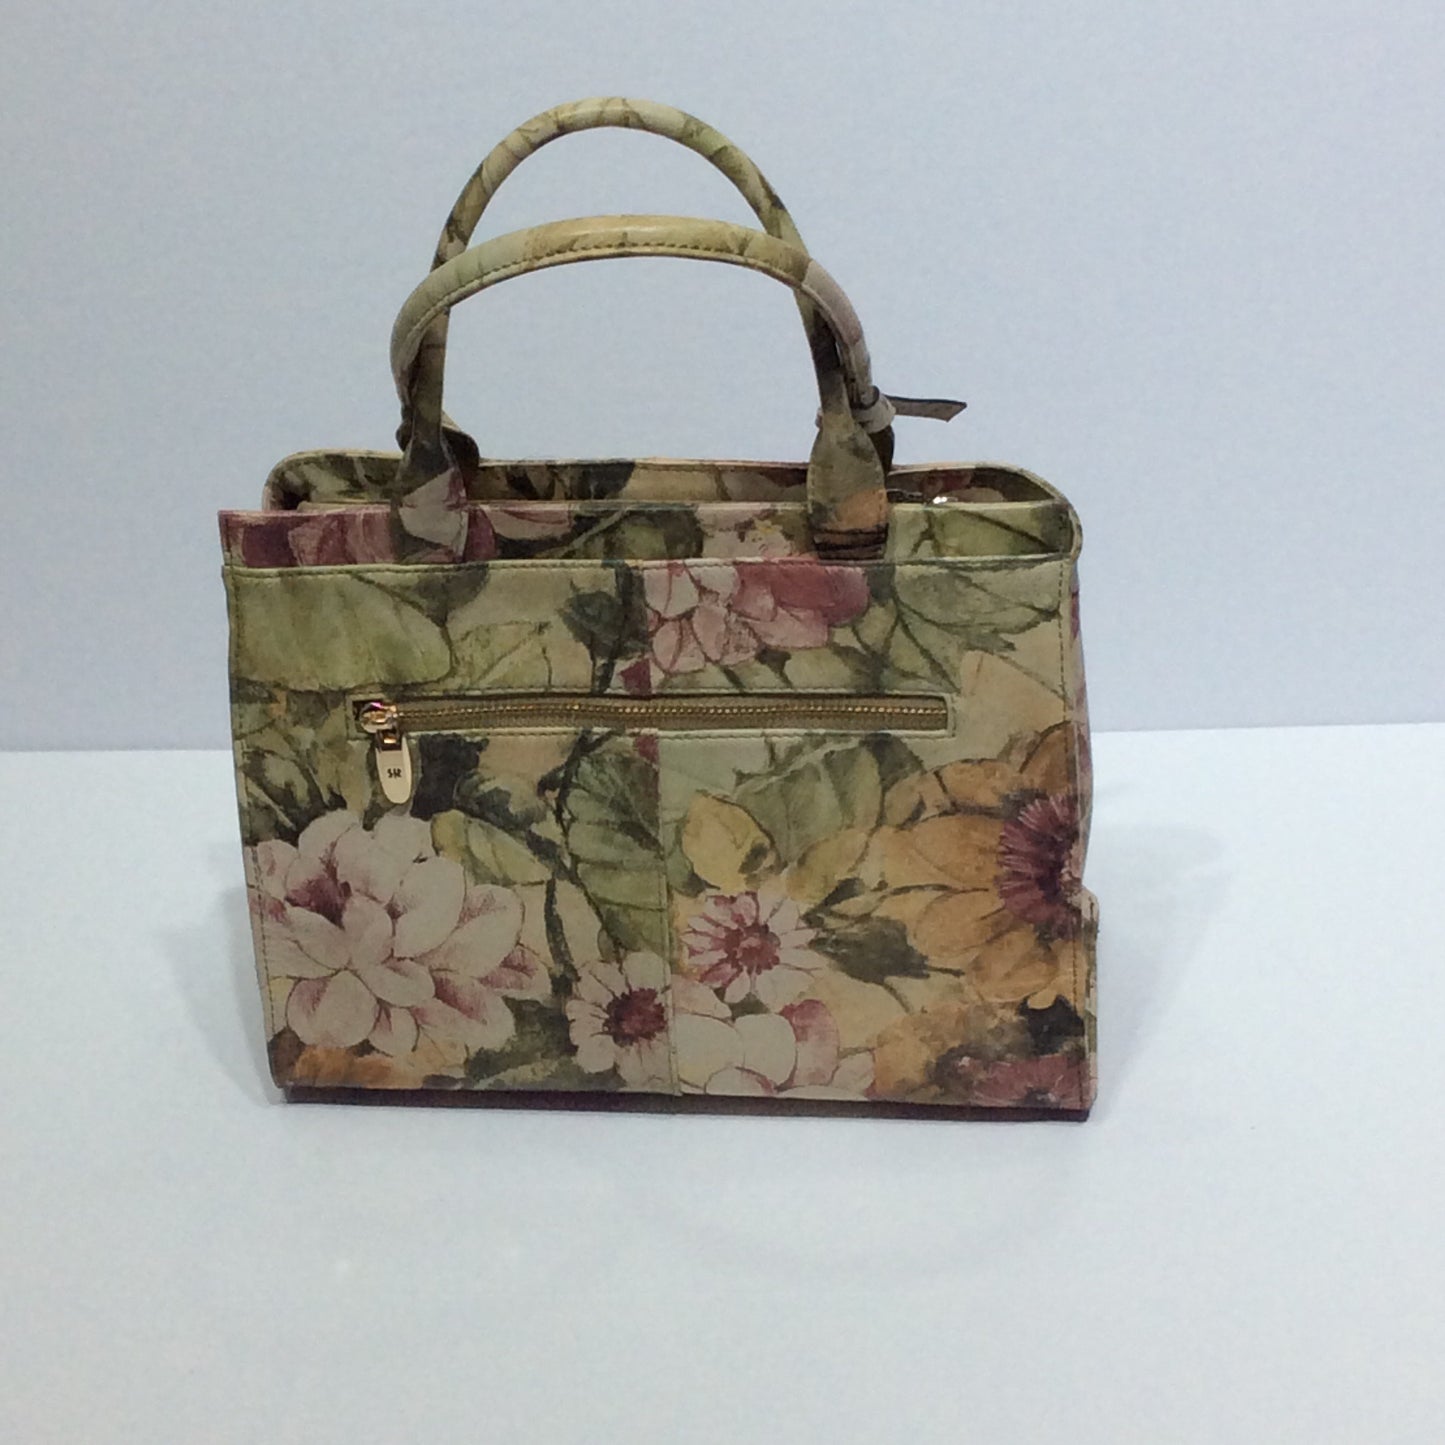 Floral pattern Italian leather purse